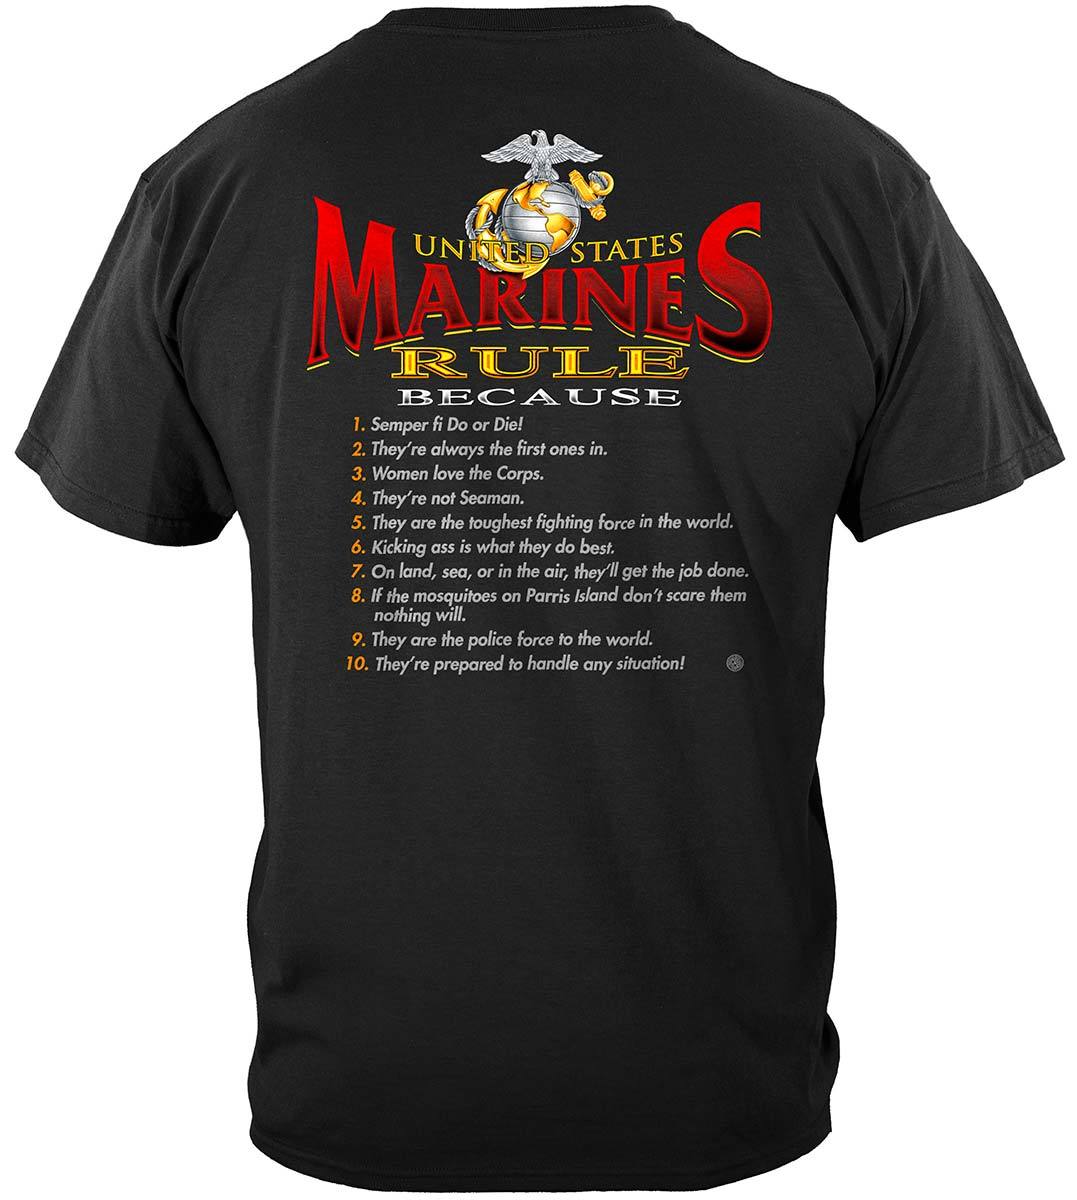 Rules Marines Premium Hooded Sweat Shirt